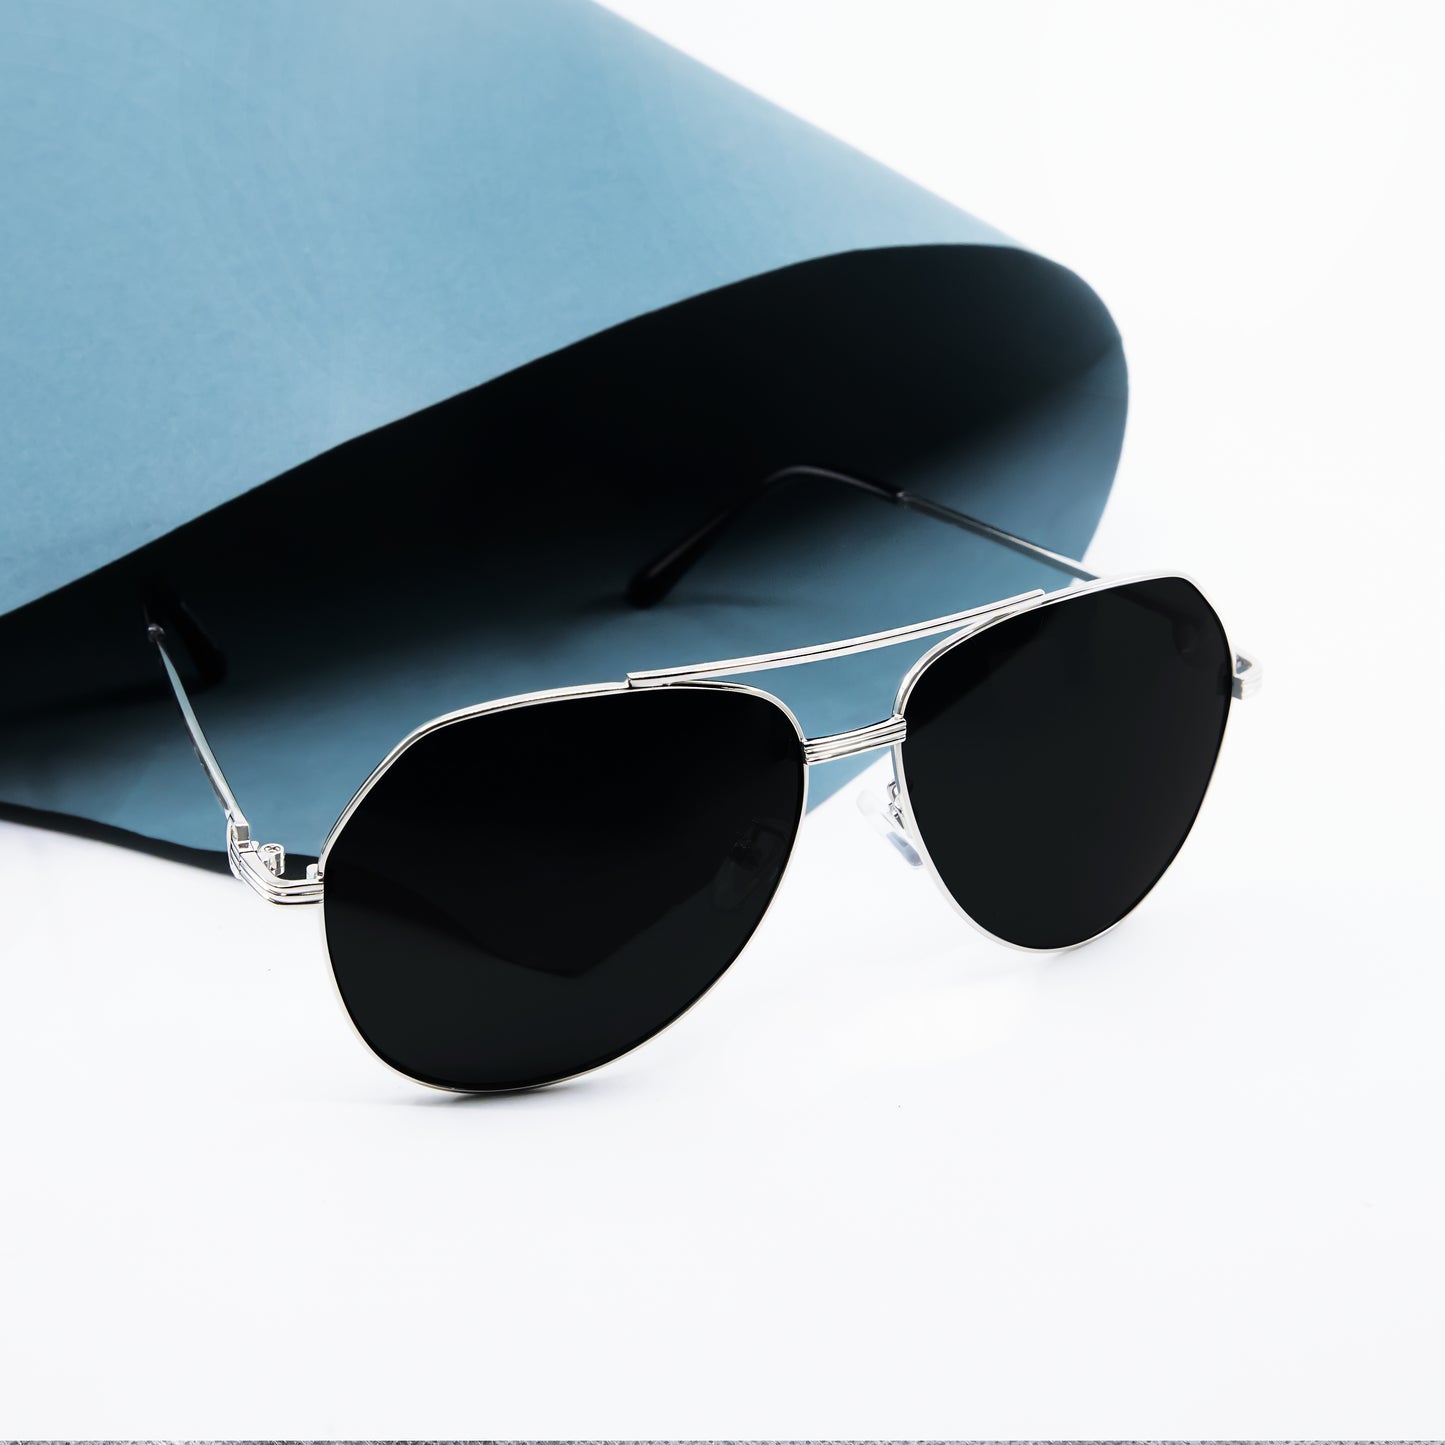 MT Mastar Silver And Black Unisex Sunglasses